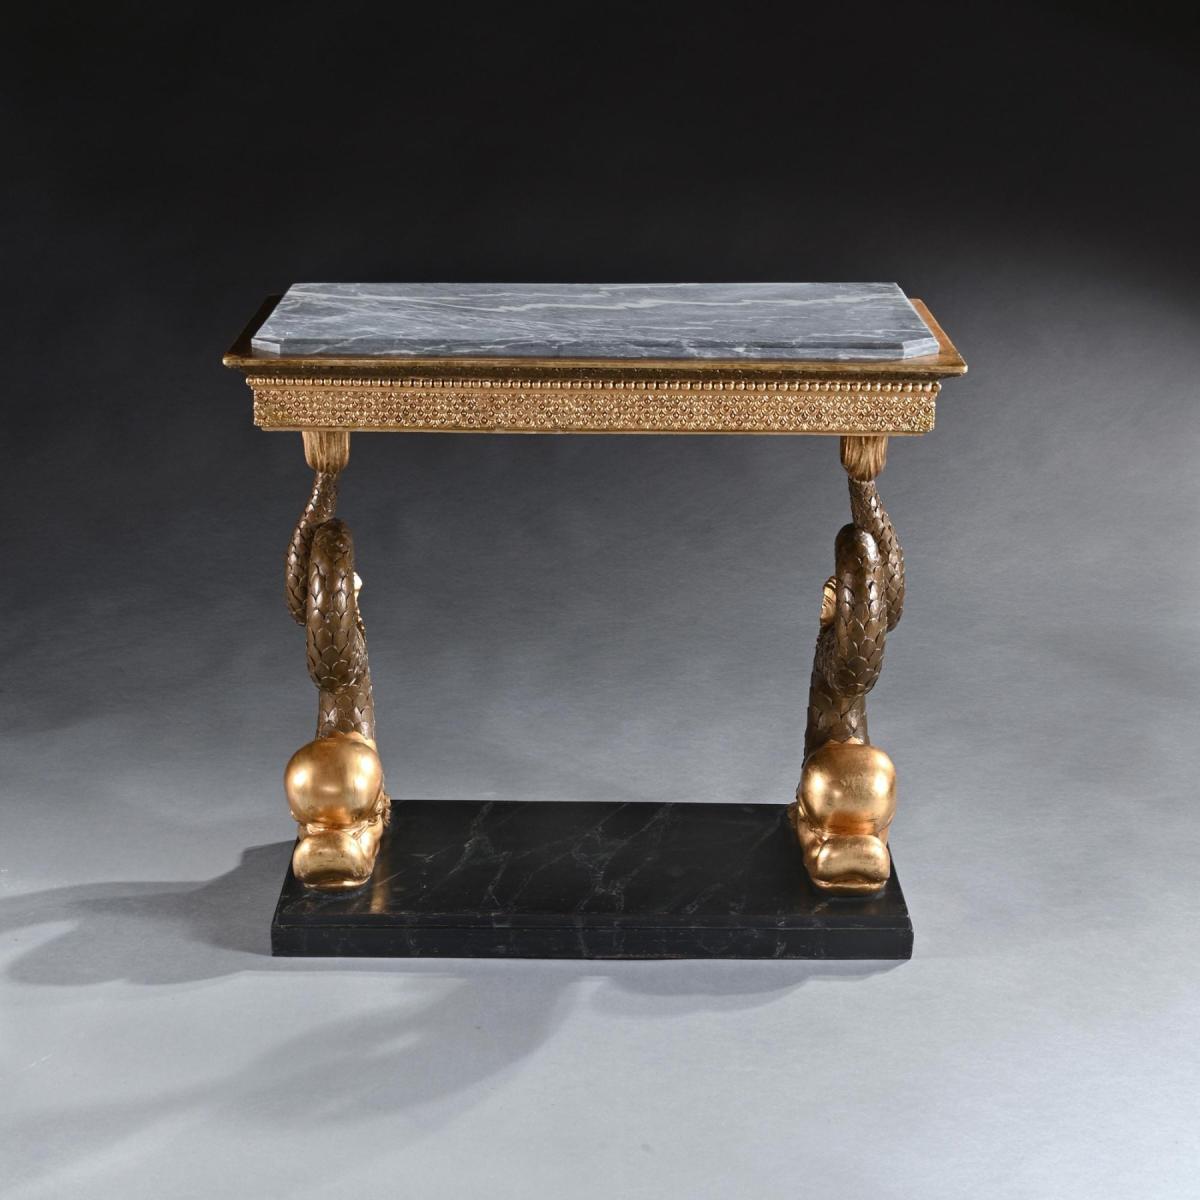 Late Gustavian 19th Century Swedish Gilt Console Table